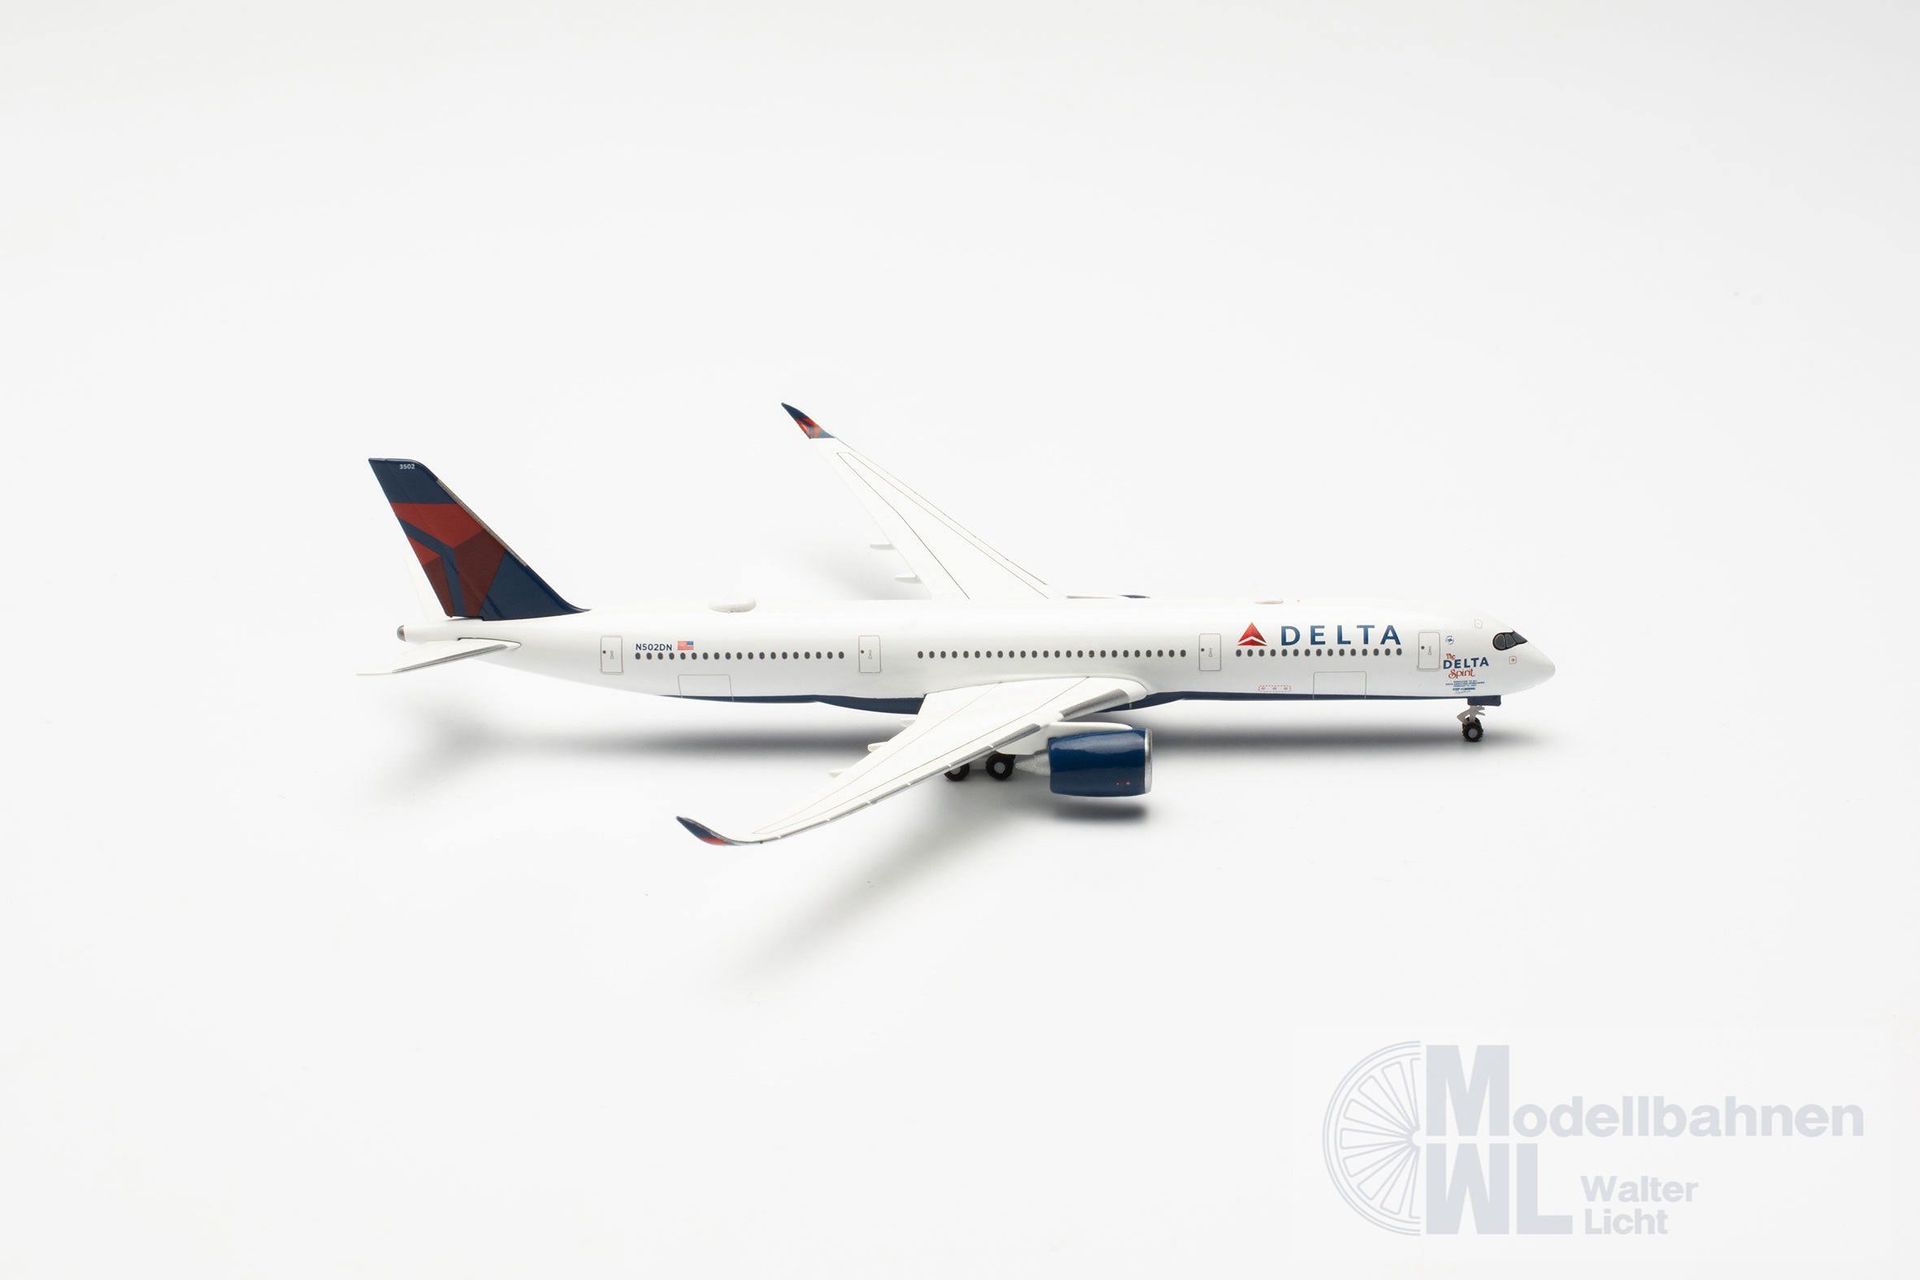 Herpa 530859-002 - Delta Air Lines Airbus A350-900 The DeltaSpirit 1:500